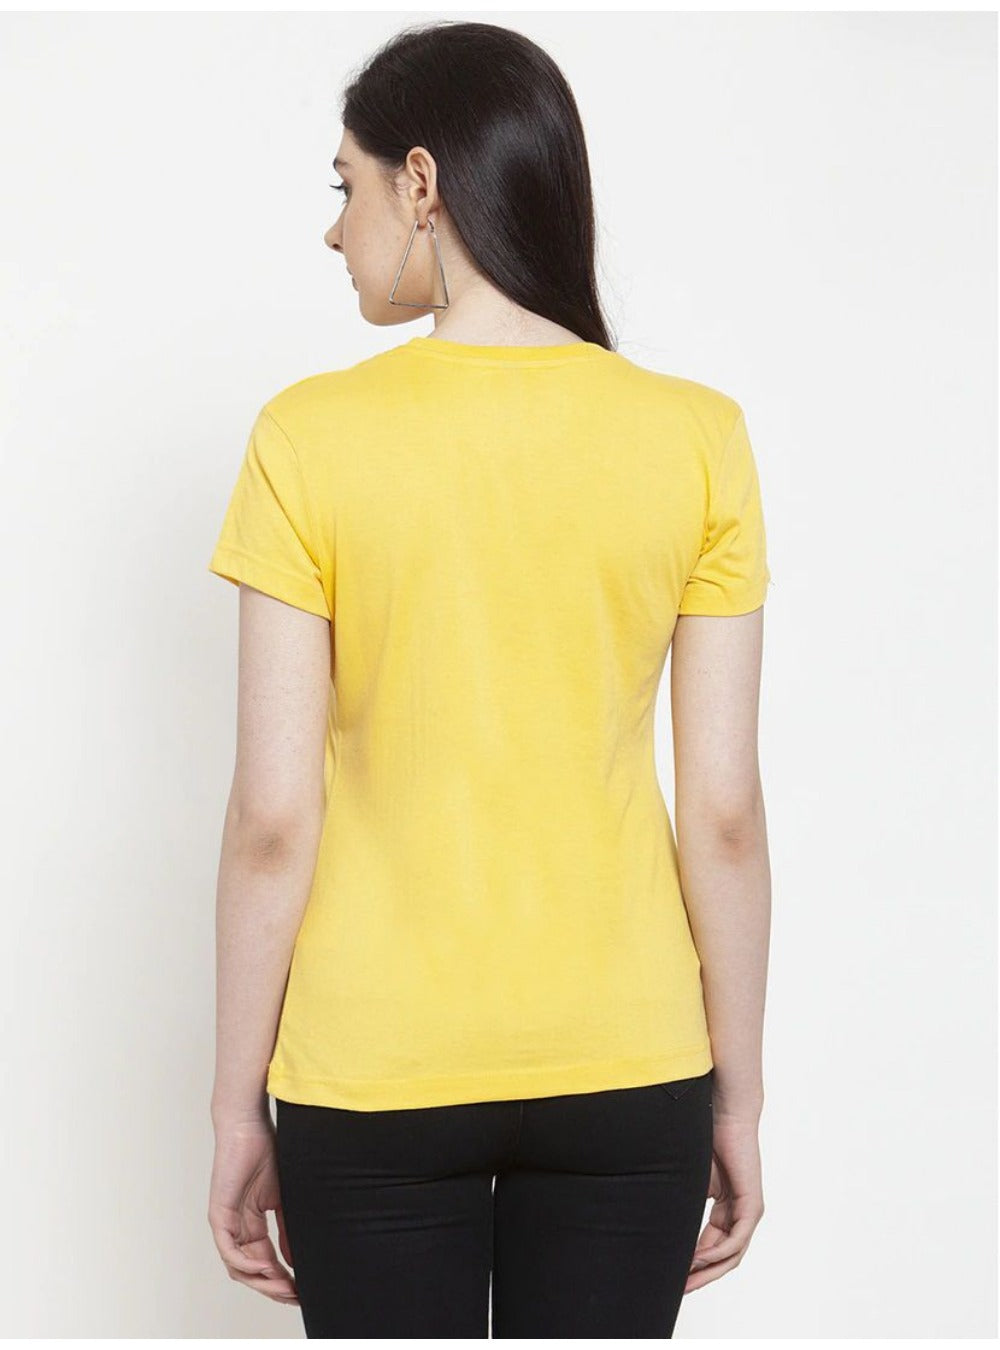 Women's Cotton Blend Princess Printed T-Shirt (Yellow) - GillKart